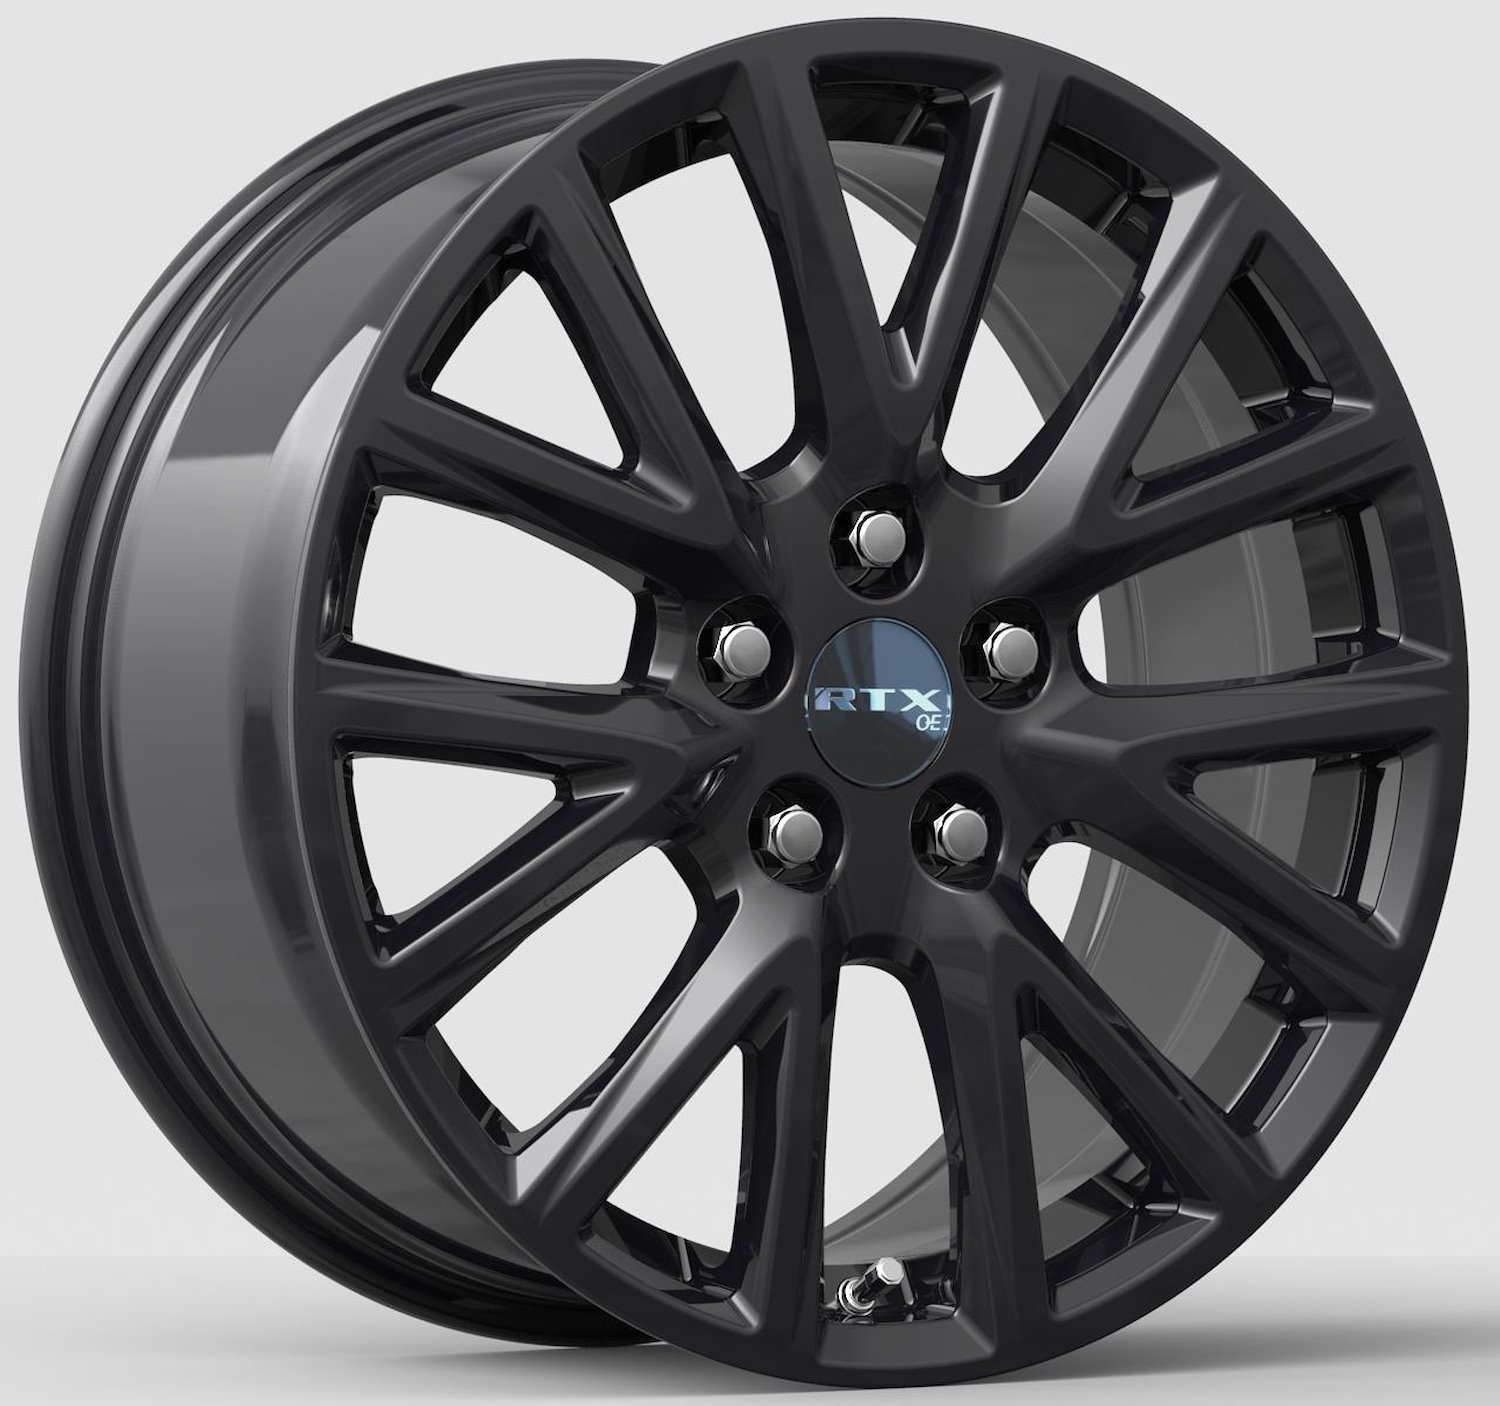 083266 OE-Series GM-06 Wheel [Size: 20" x 8.50"] Gloss Black Finish